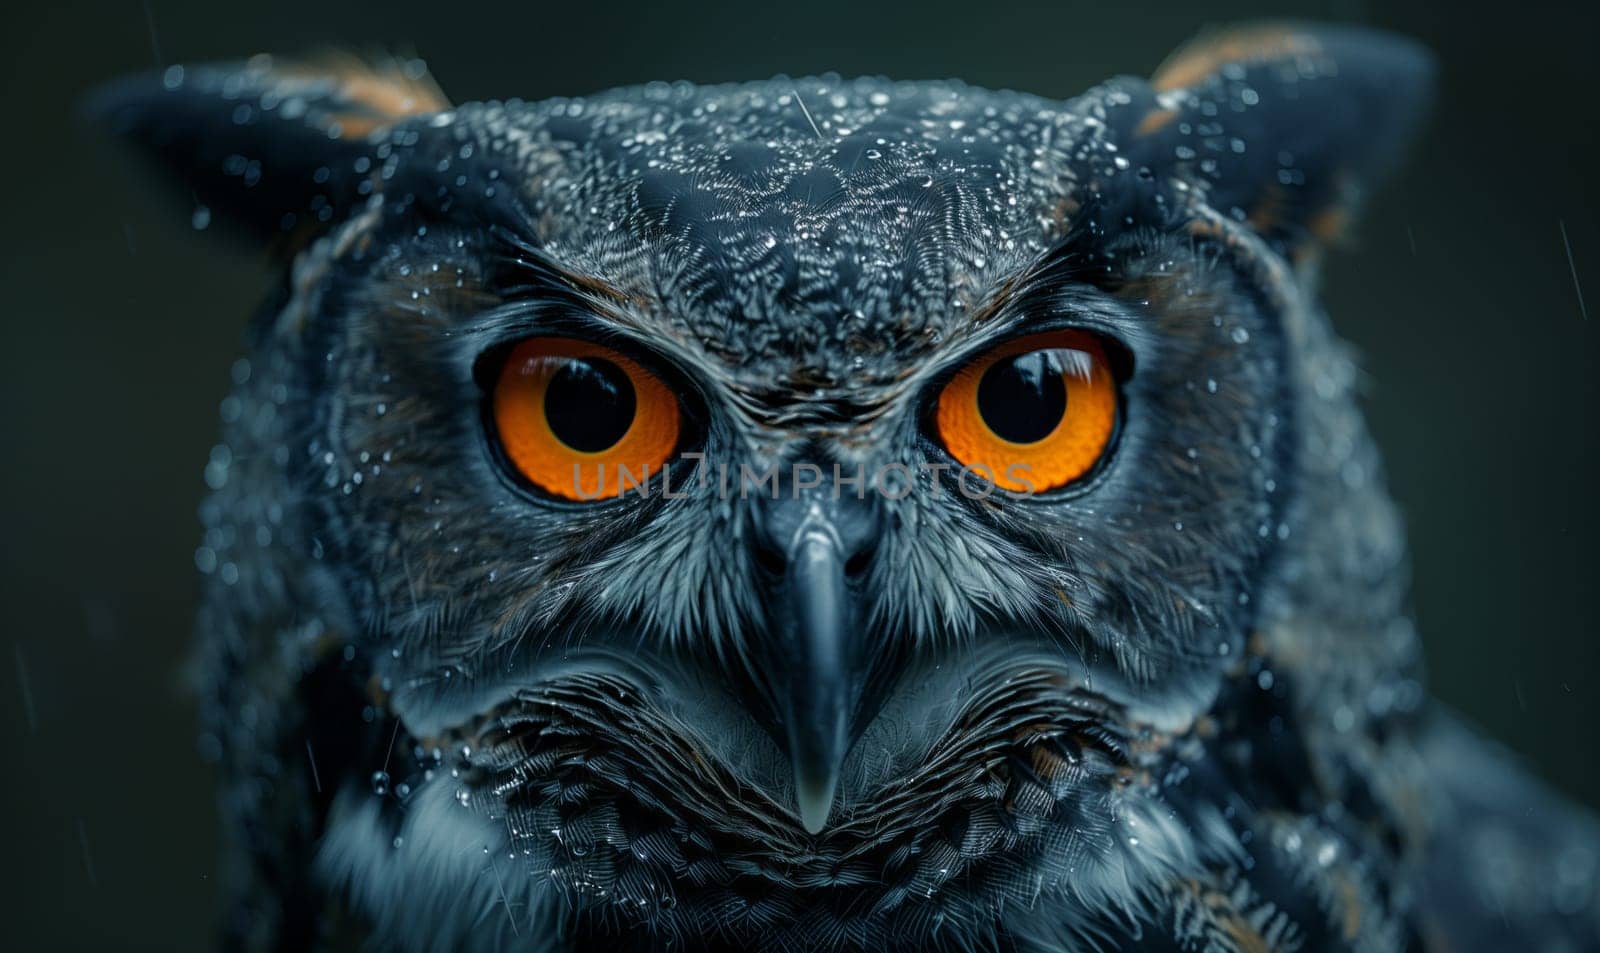 Close up of Eastern Screech owl with grey head, orange eyes, and sharp beak by richwolf